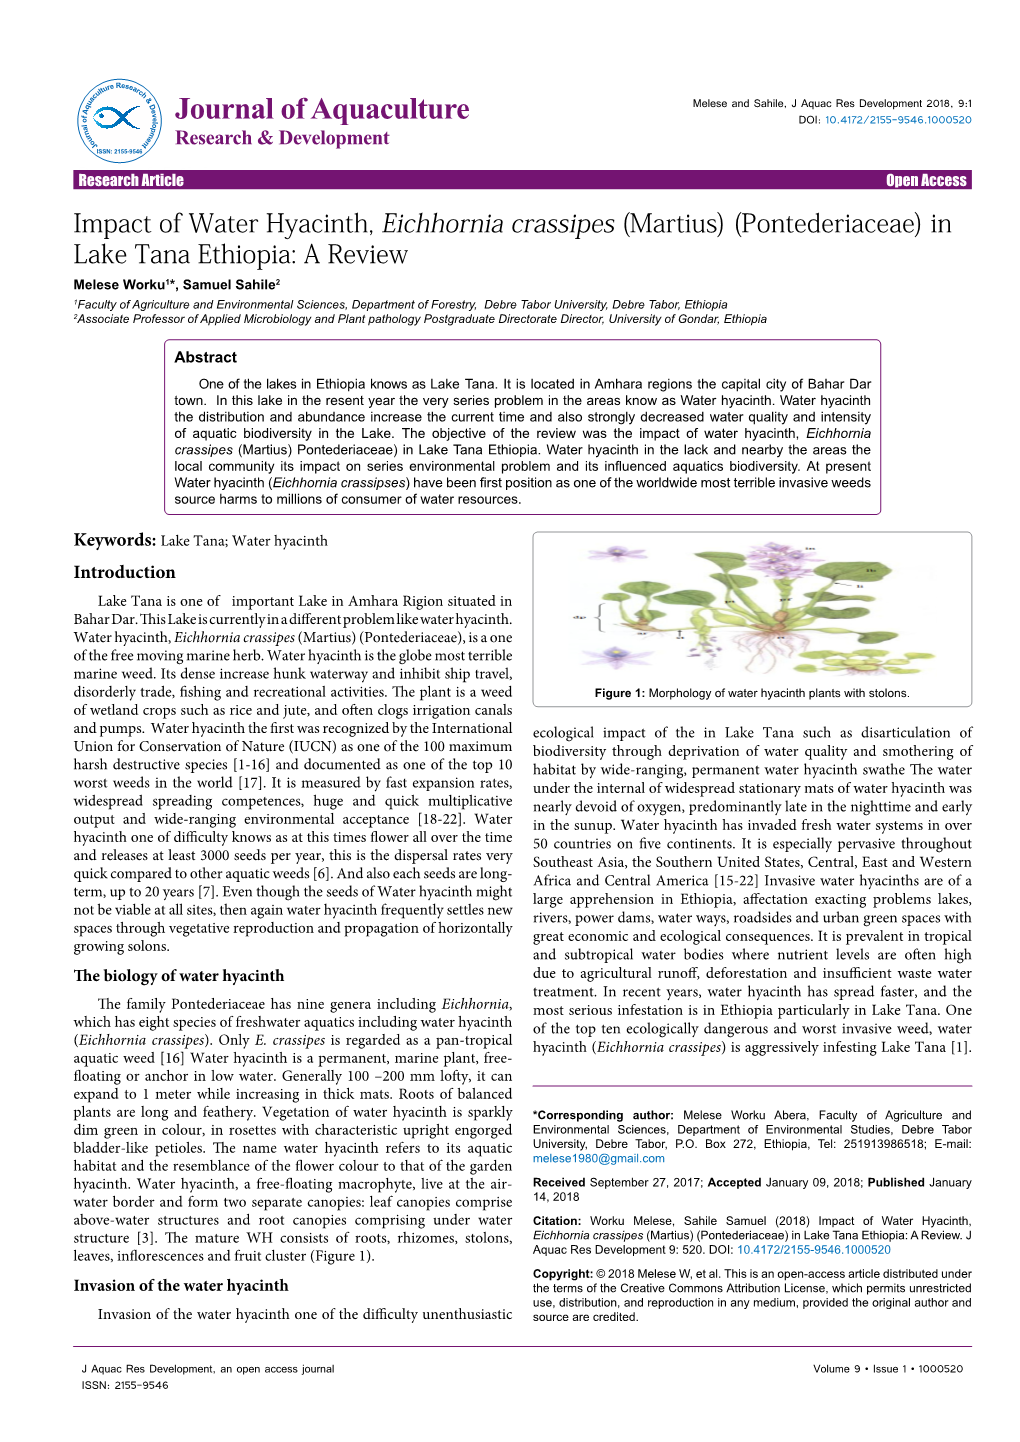 Impact of Water Hyacinth, Eichhornia Crassipes (Martius) (Pontederiaceae) in Lake Tana Ethiopia: a Review